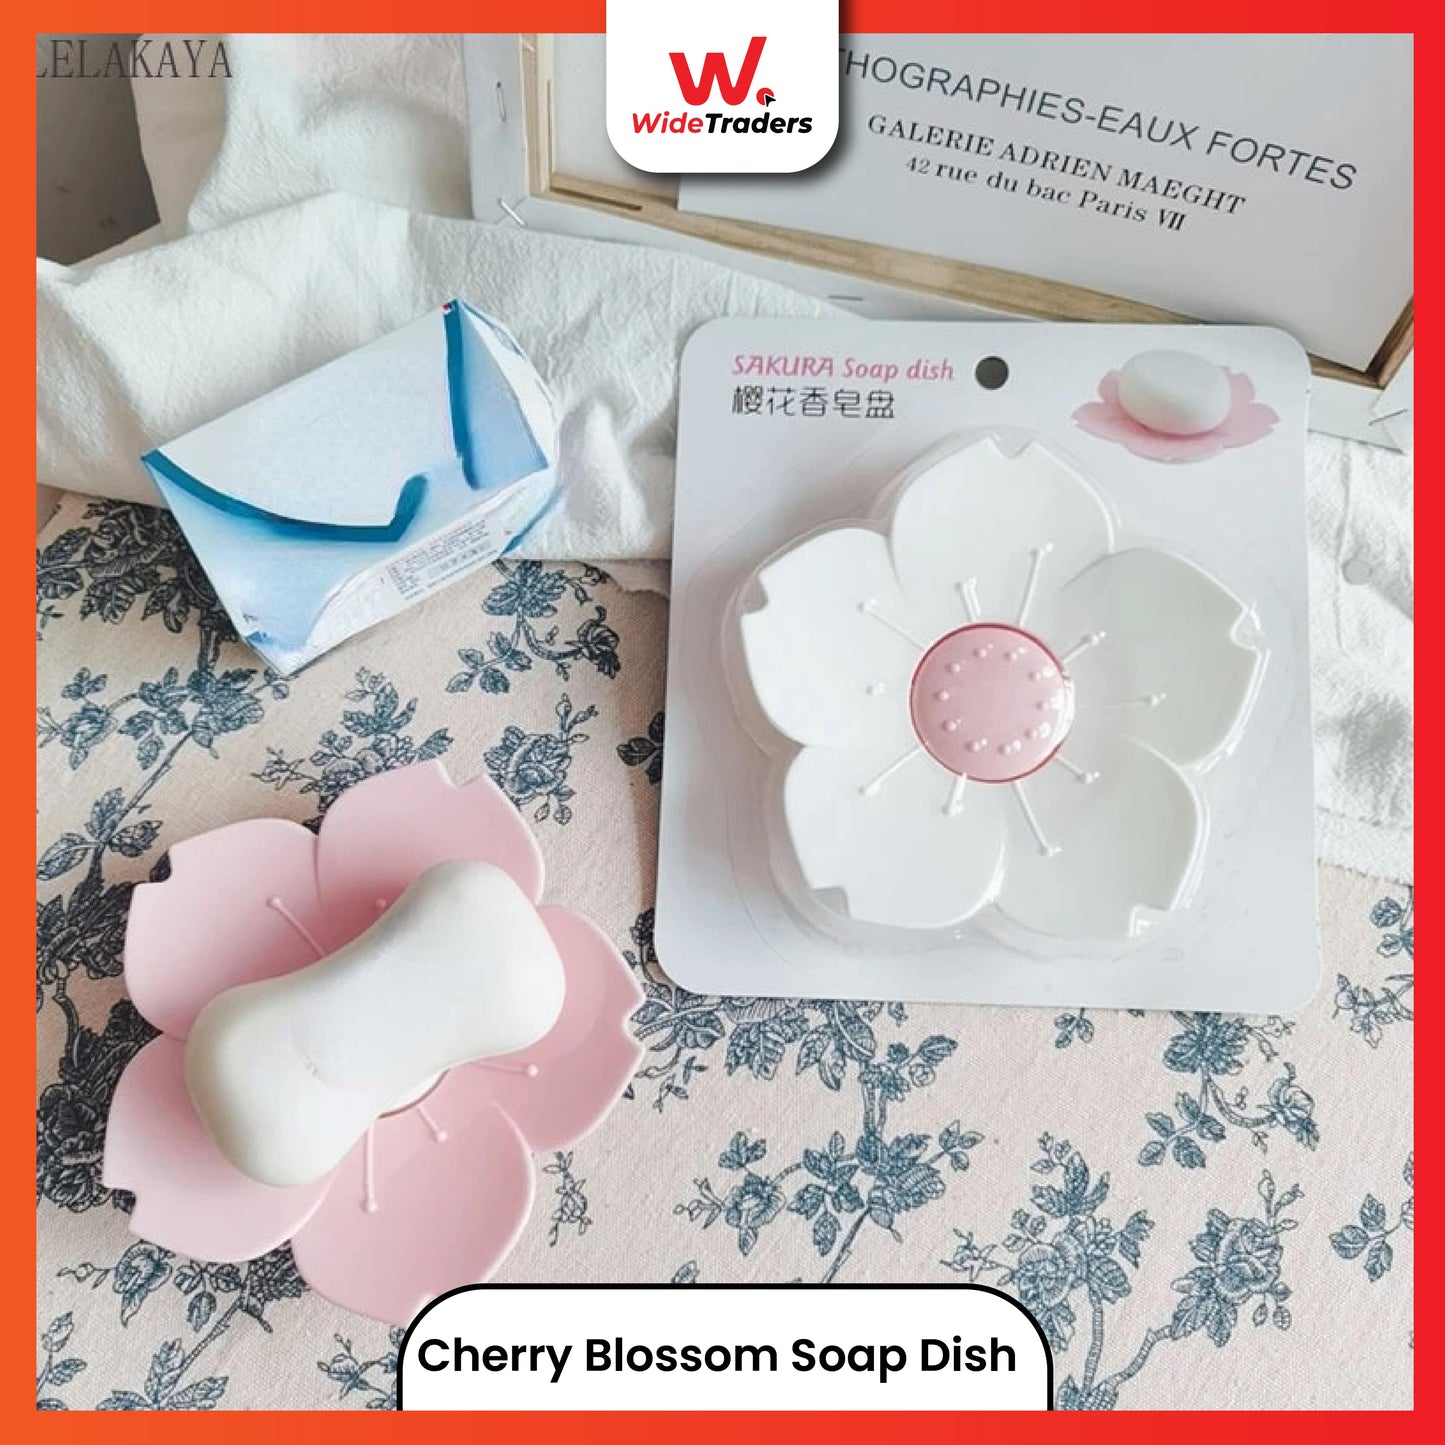 Cherry Blossom Soap Dish